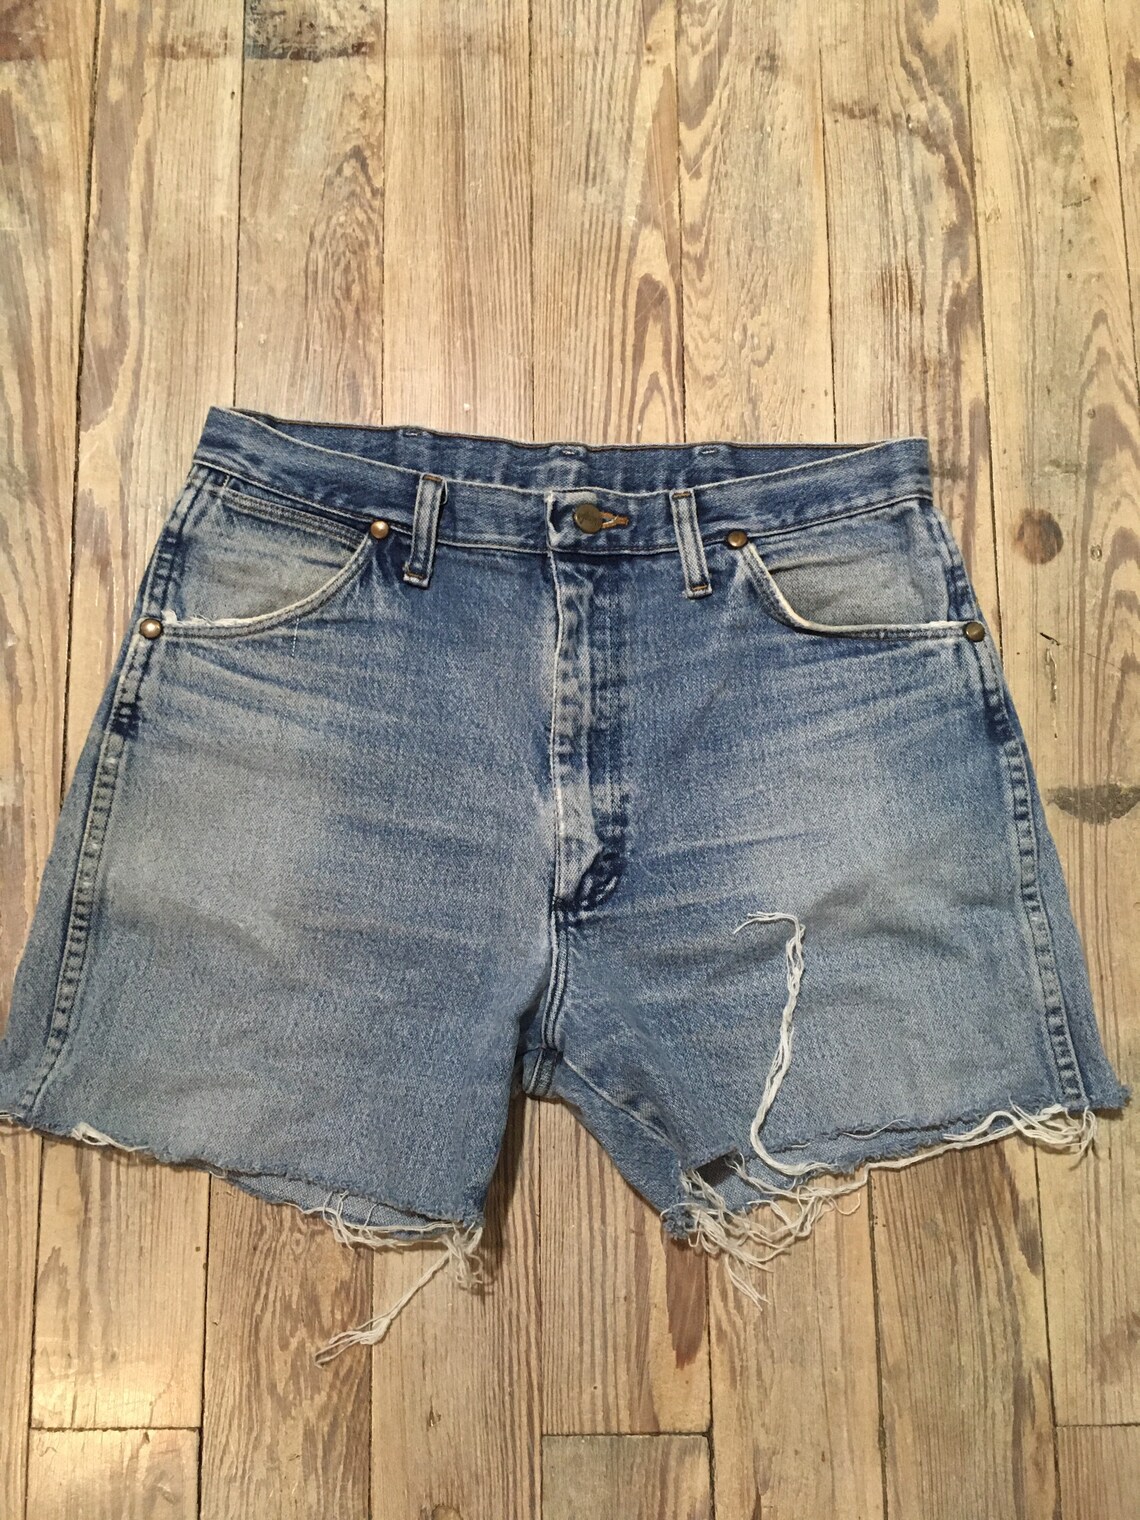 Vintage wrangler jean shorts | Etsy